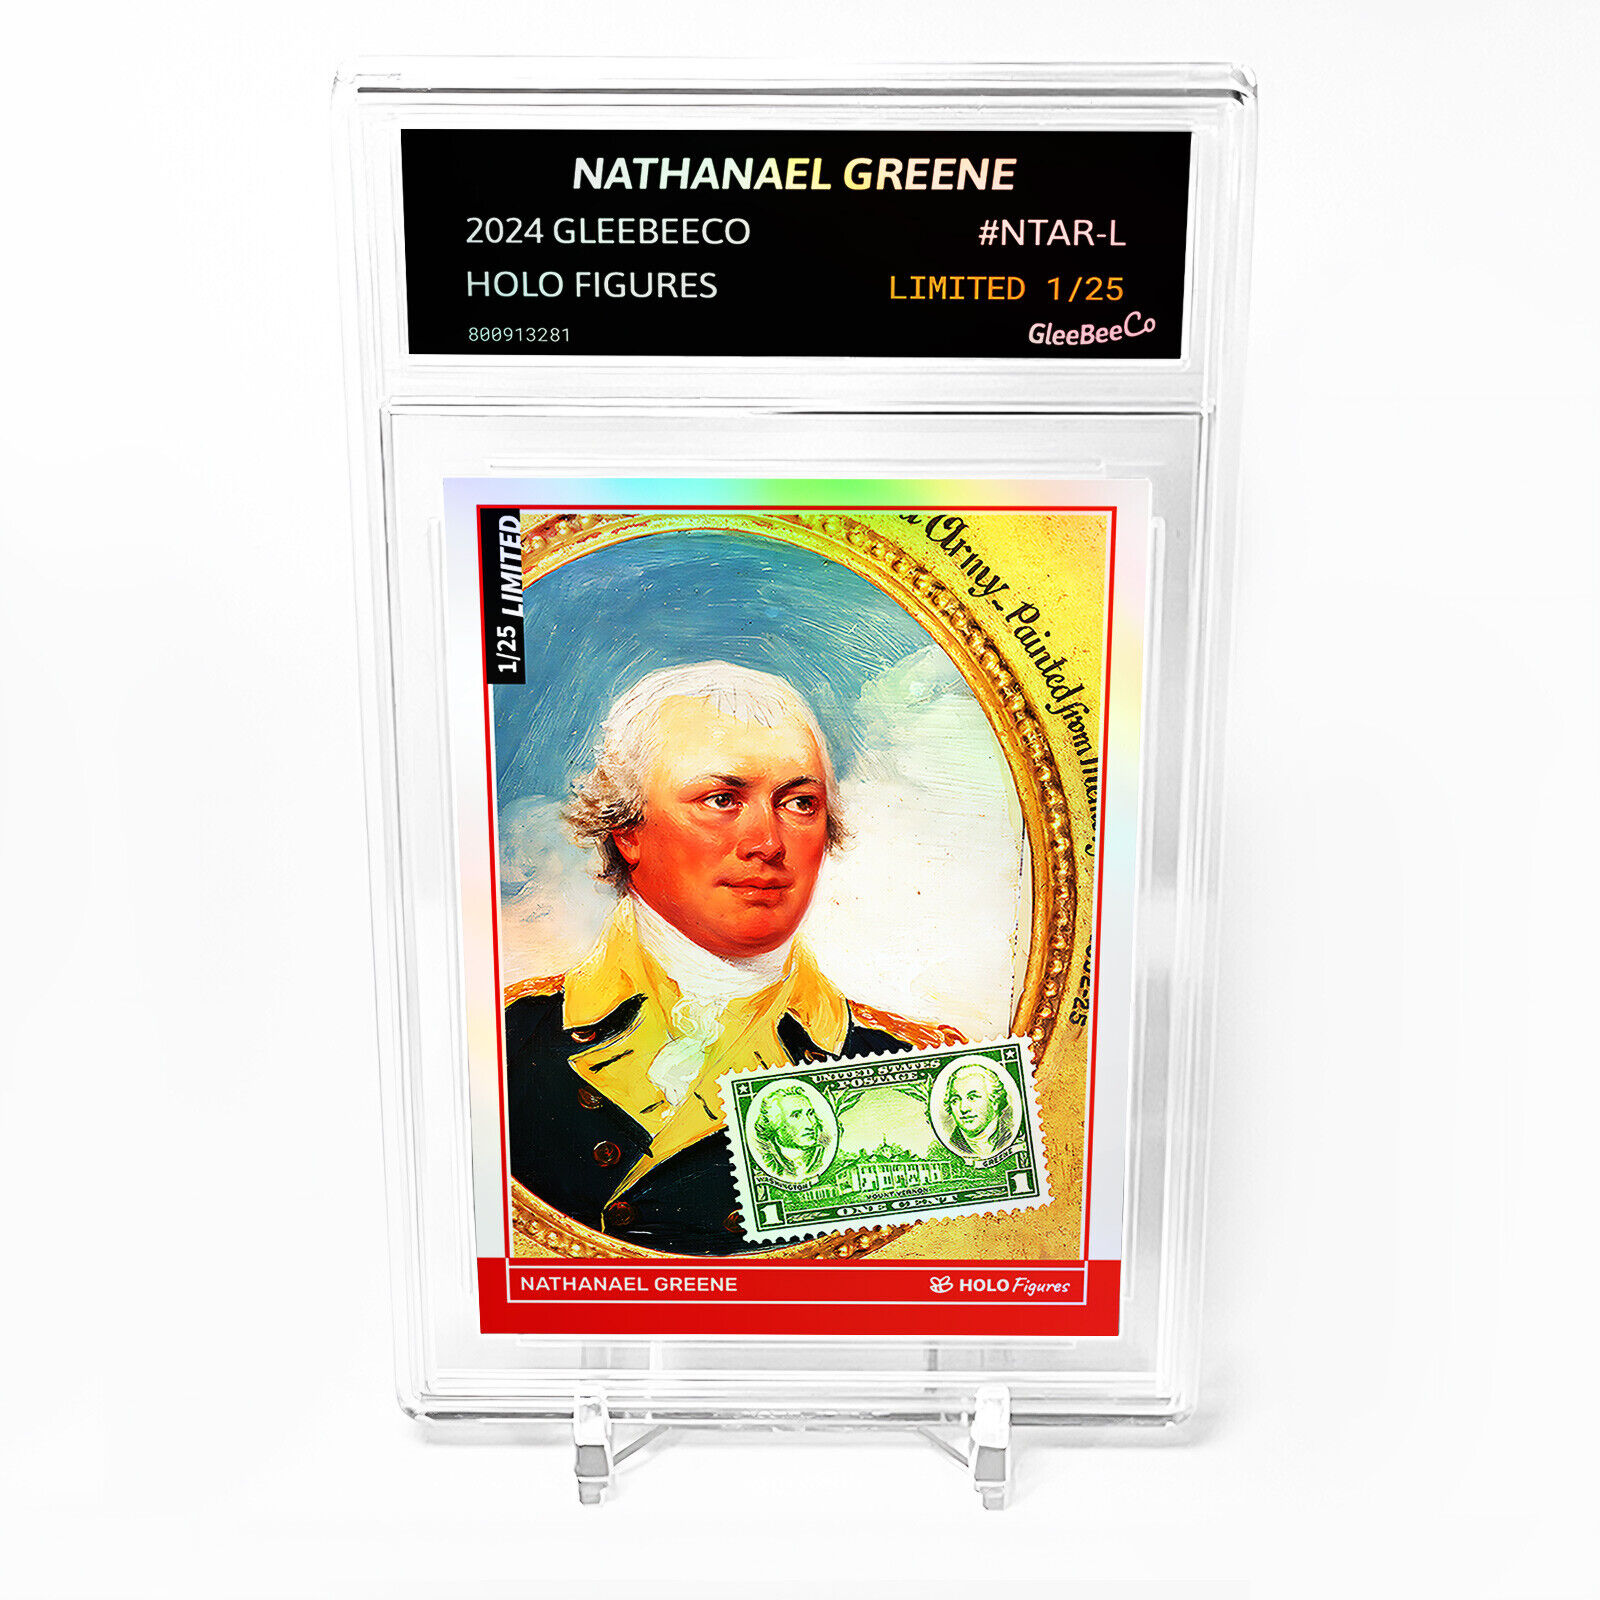 NATHANAEL GREENE 2024 GleeBeeCo Card American Military Officer Holo #NTAR-L /25